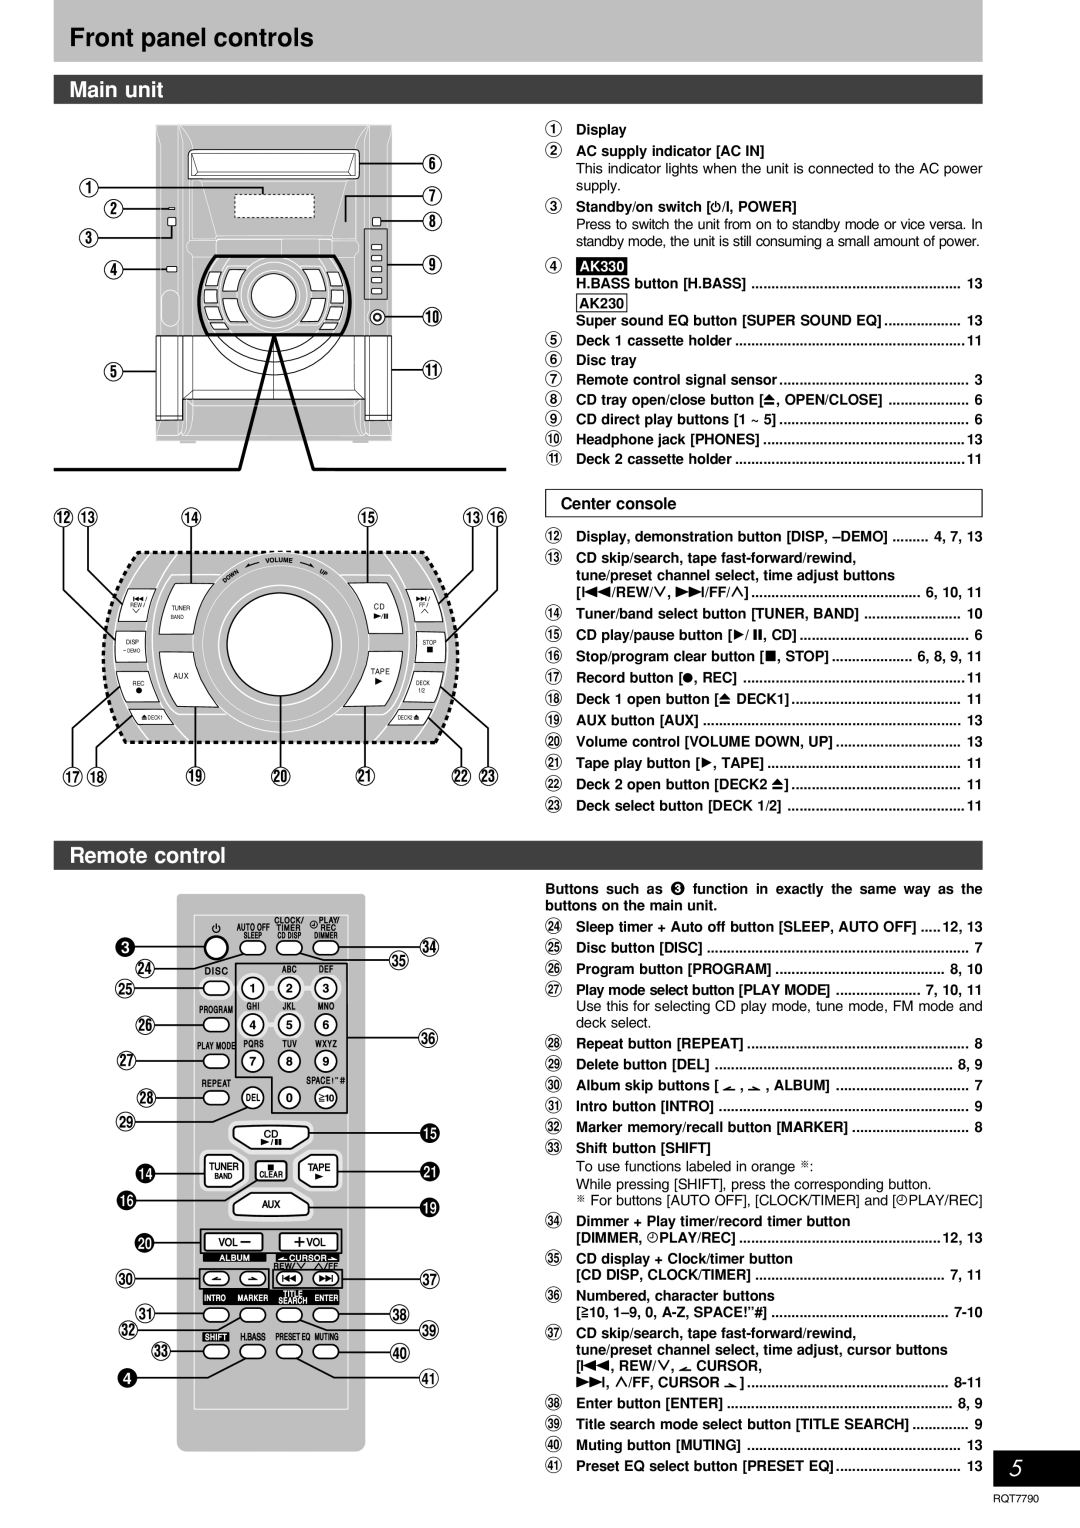 Panasonic SC-AK330 important safety instructions Front panel controls, Main unit, Remote control, 4AK330 